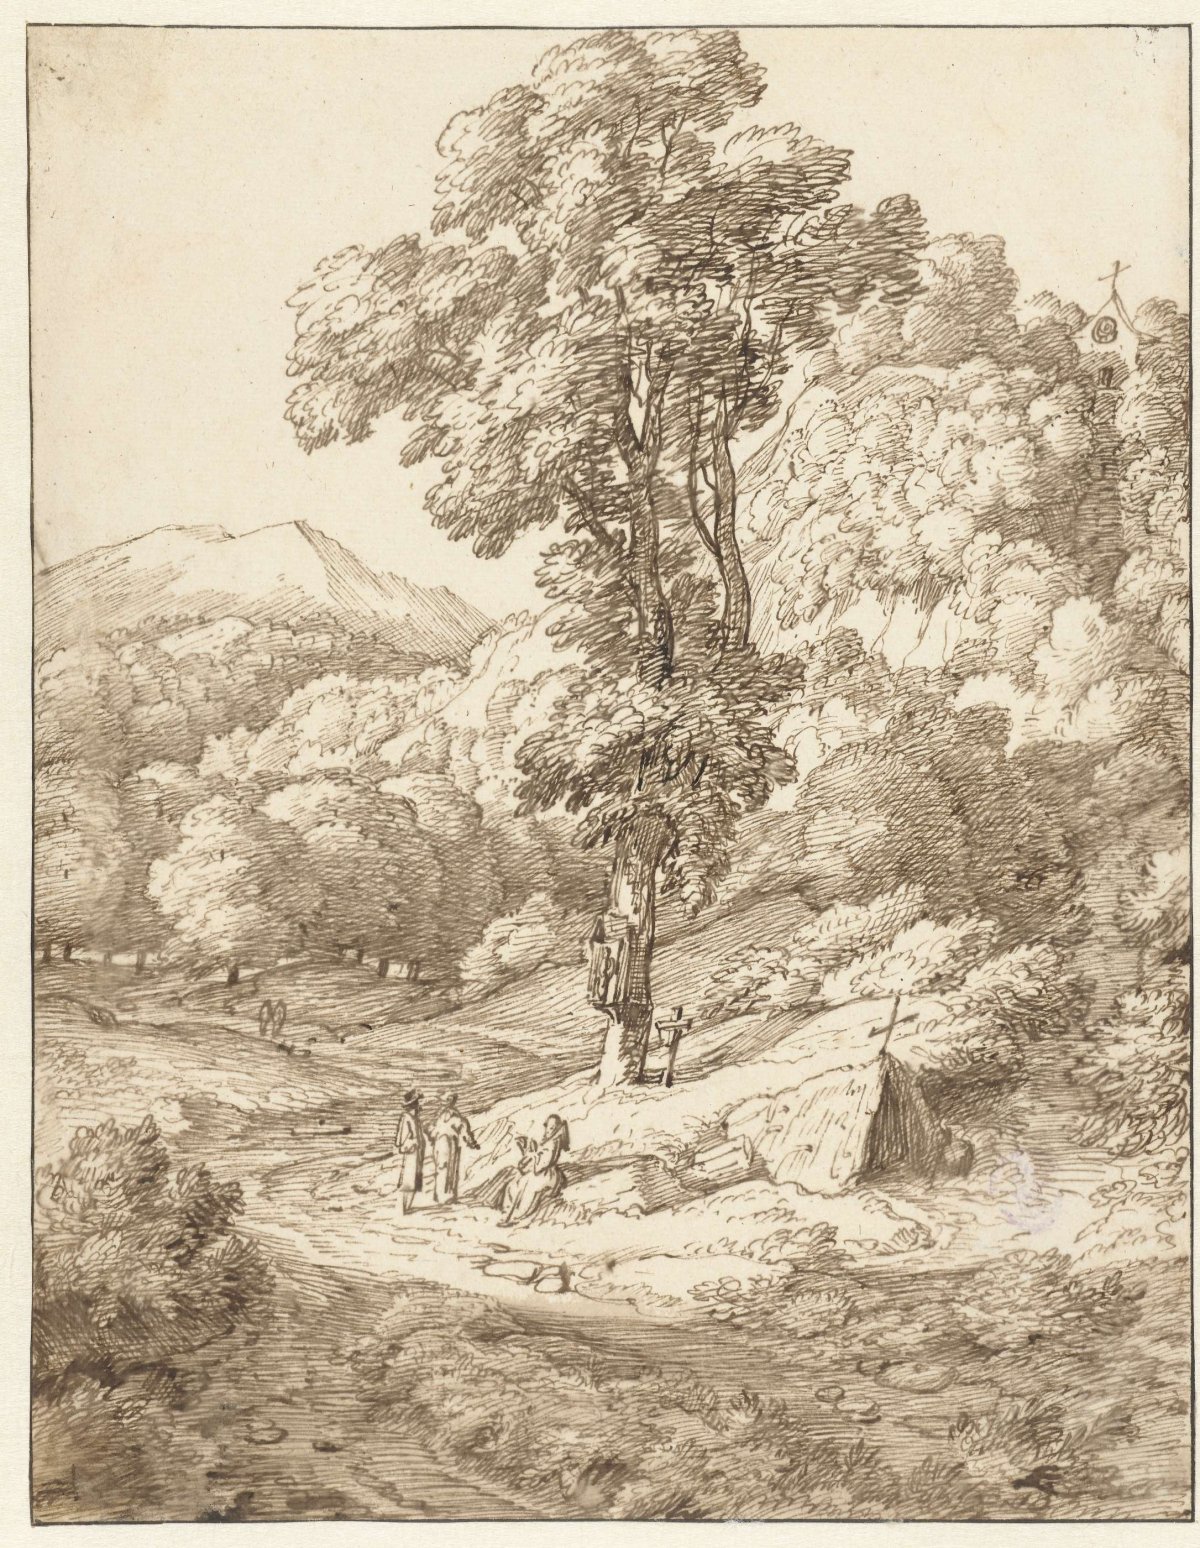 De hermitage, Jacob Esselens, 1636 - 1687